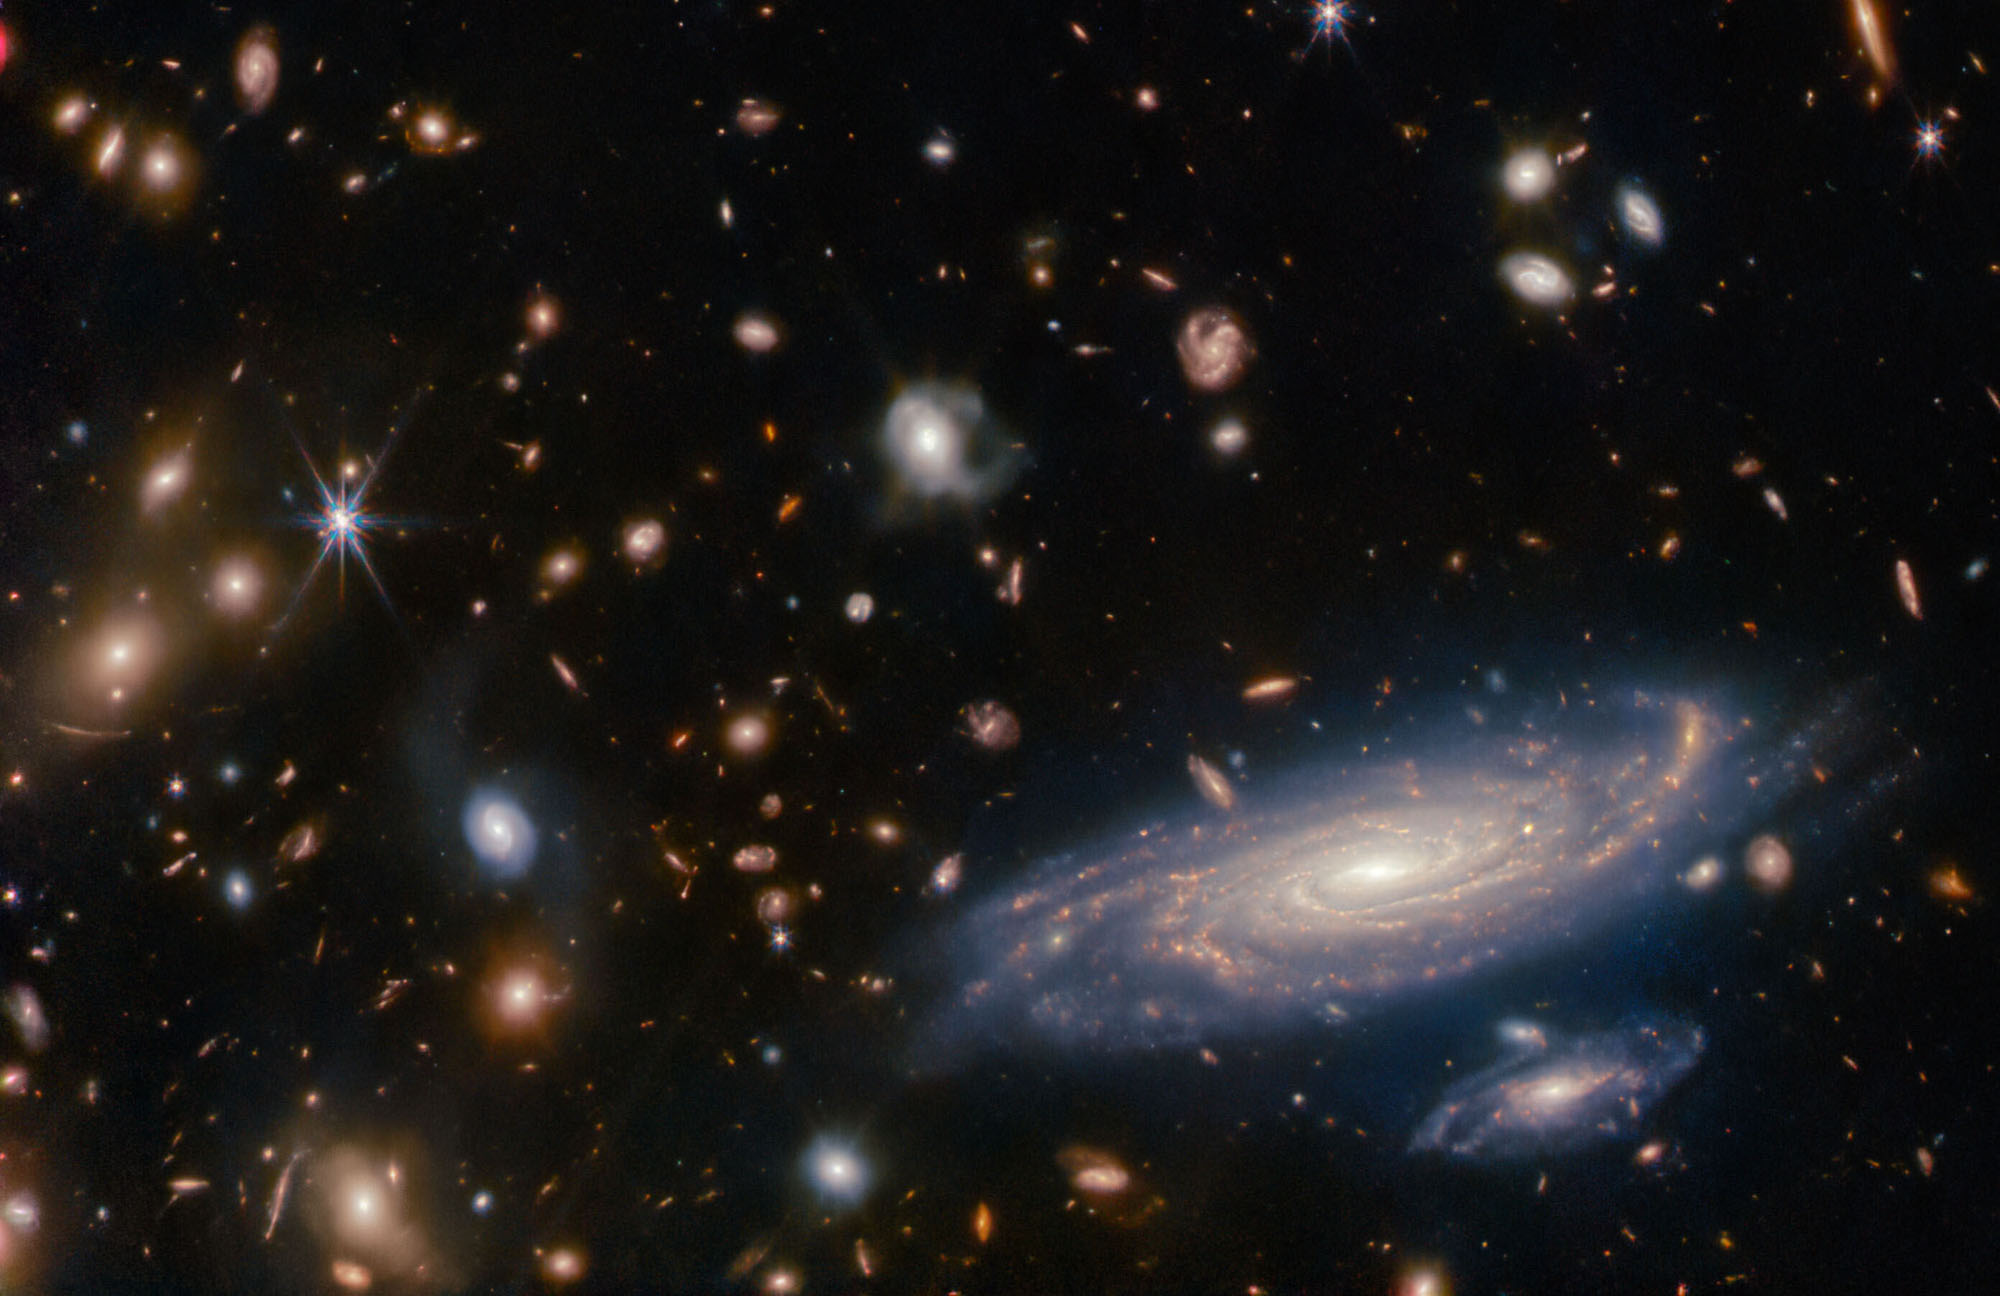 “NO MORE DOUBT!” James Webb Telescope Image DEBUNKS Our Cosmology Into Pieces!